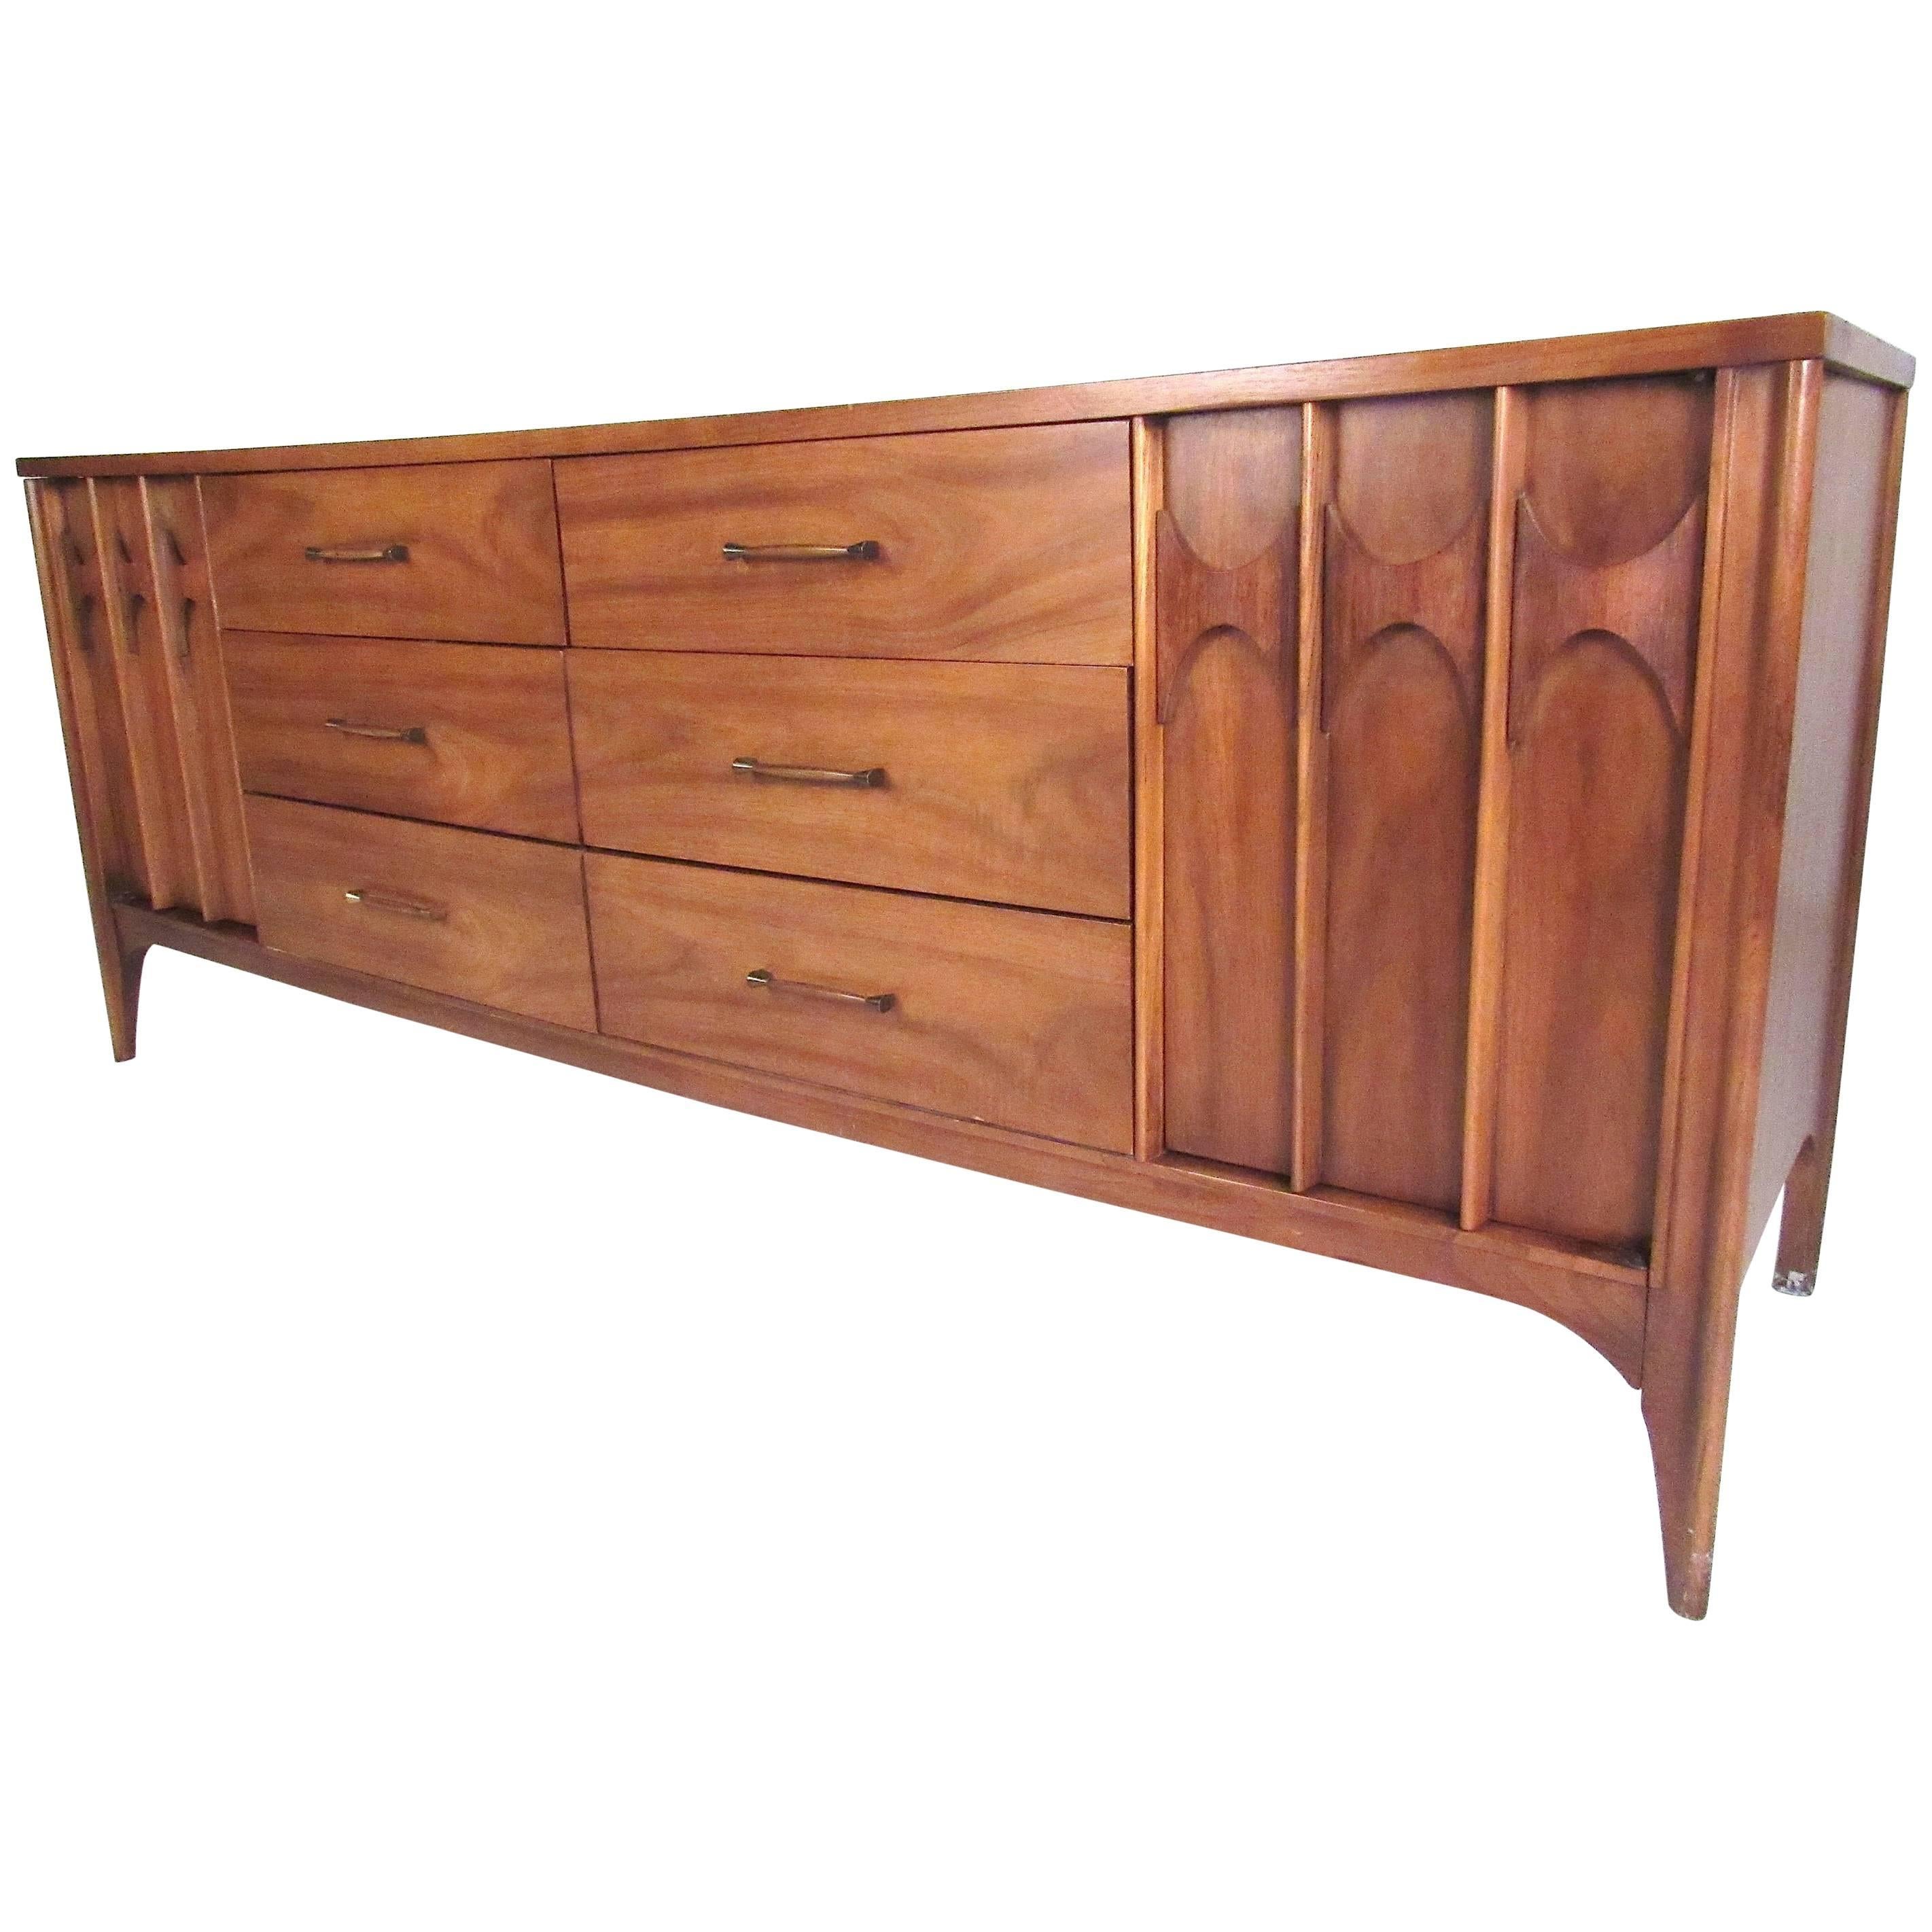 Walnut Dresser from Kent-Coffey "Perspecta" Furniture Line